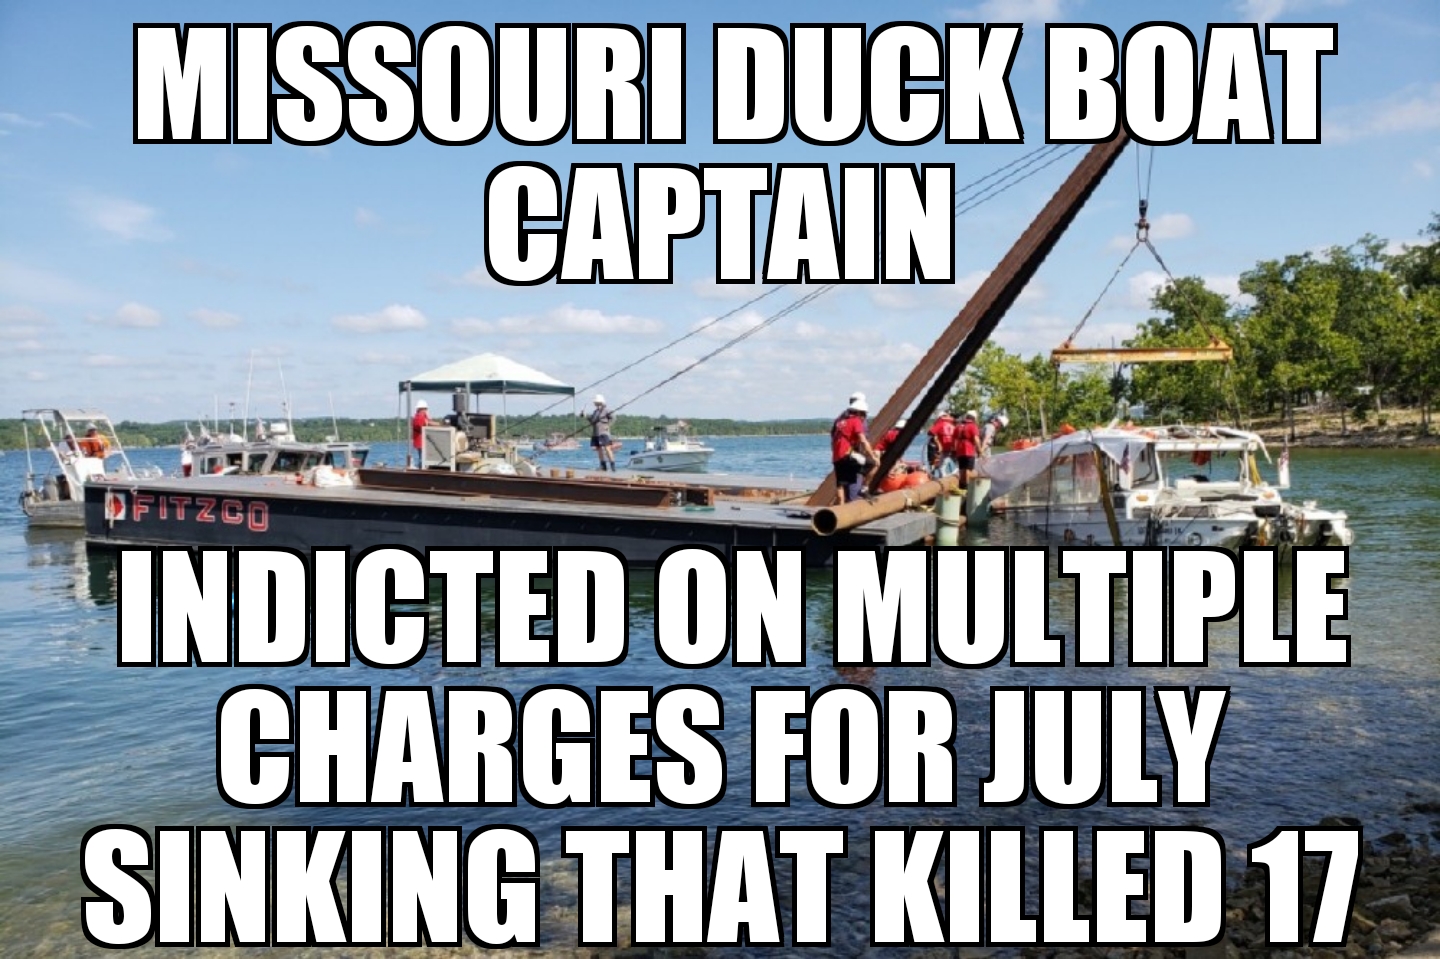 Missouri duck boat captain indicted